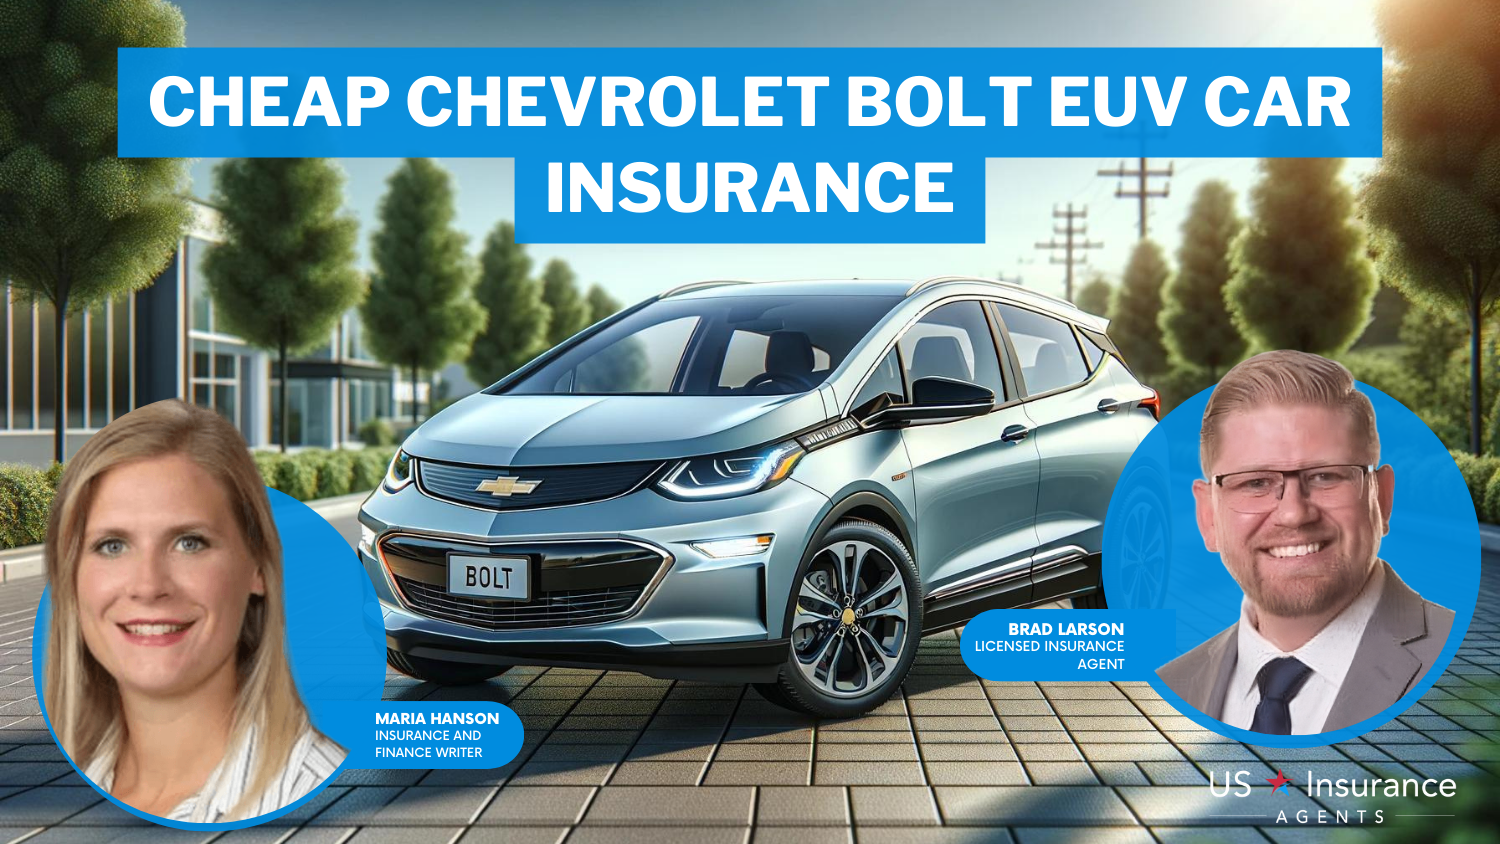 Cheap Chevrolet Bolt EUV Car Insurance: Erie, State Farm, and Mercury